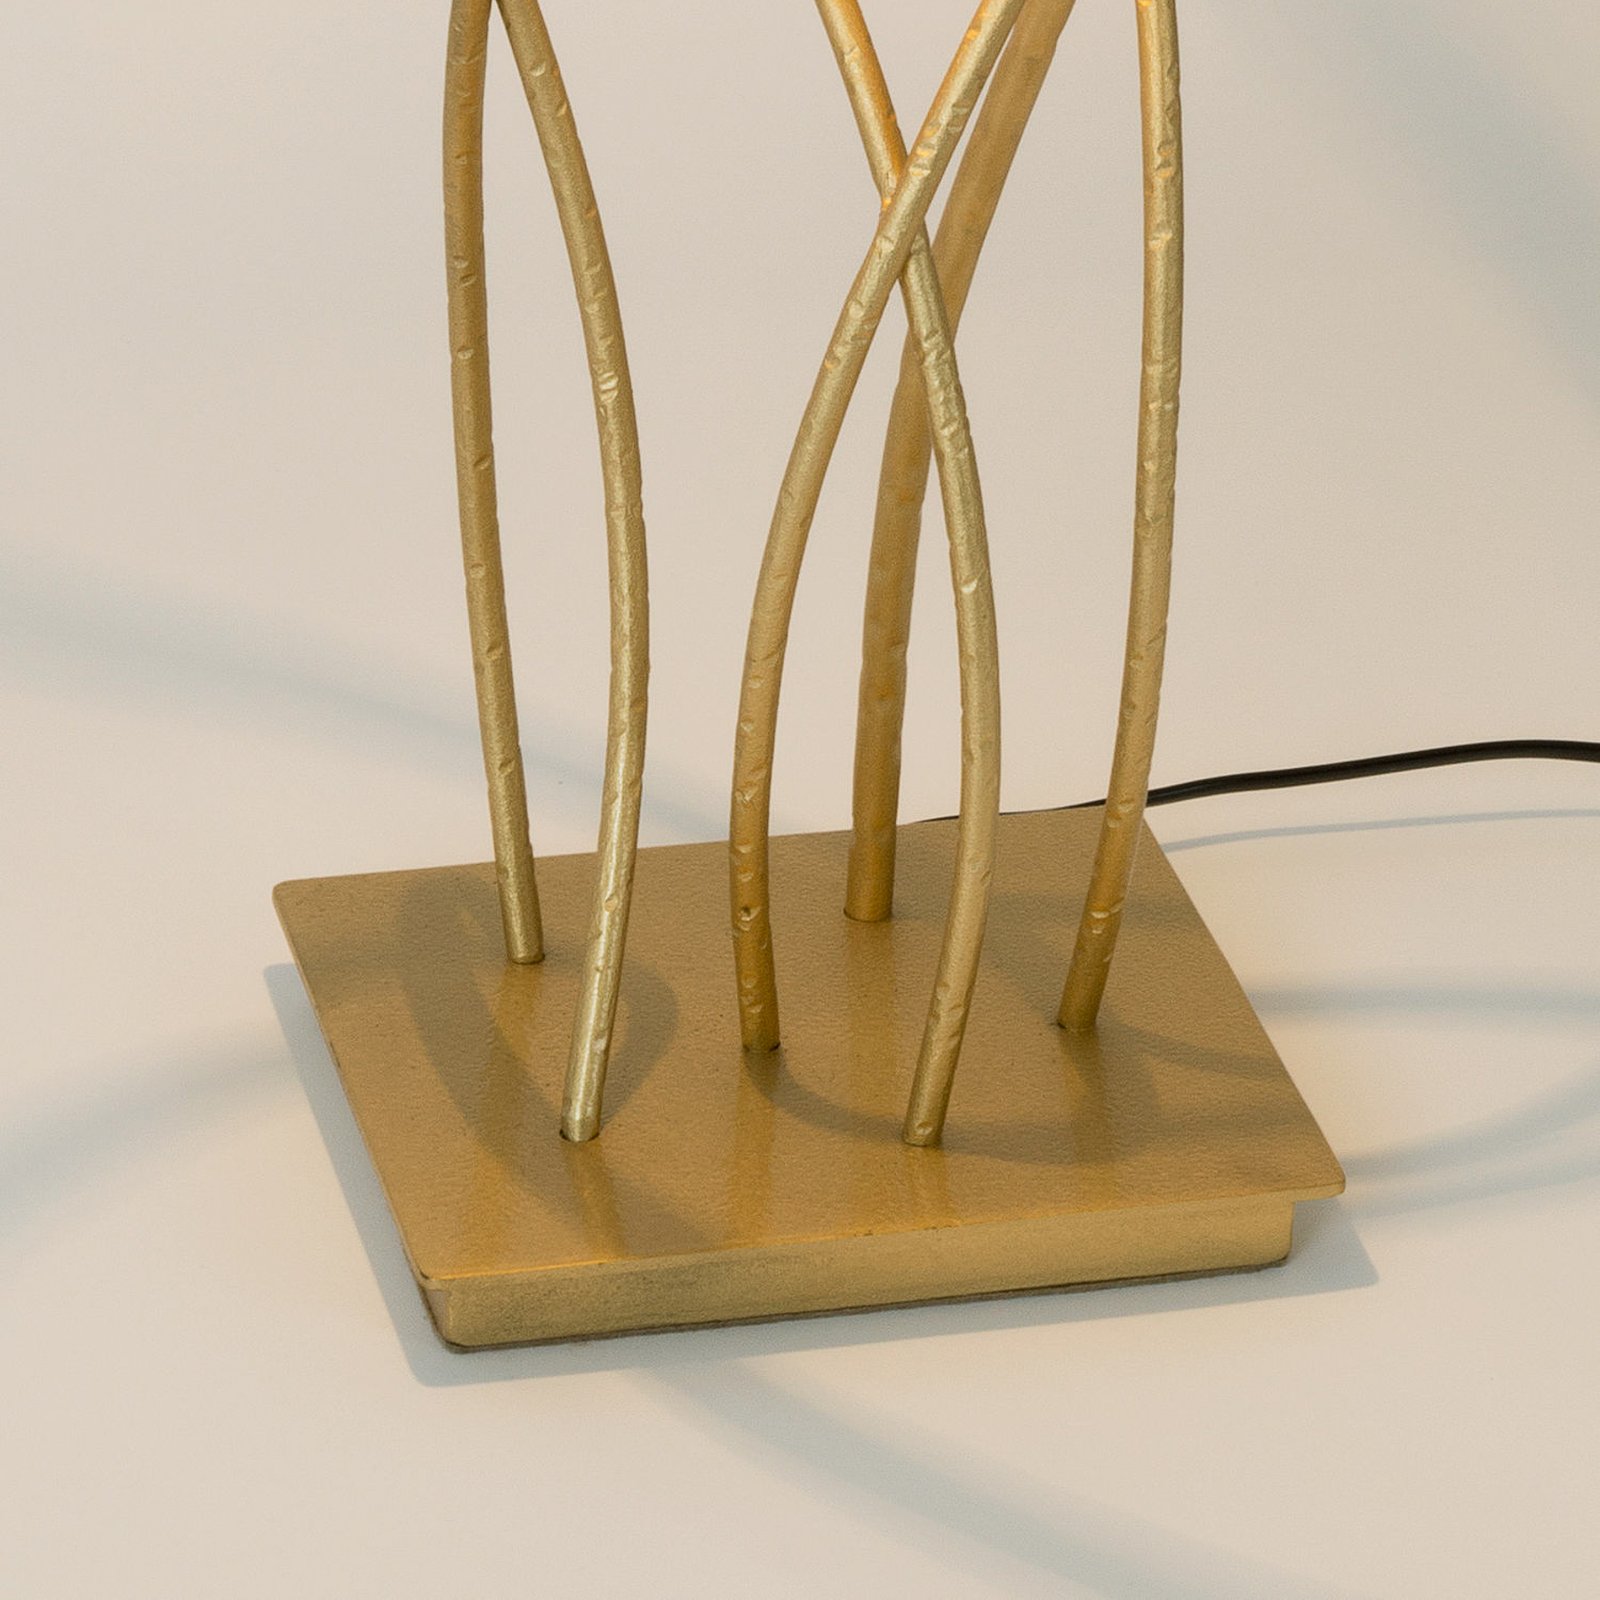 Elba ovāla galda lampa, zelta/melna, augstums 75 cm, dzelzs